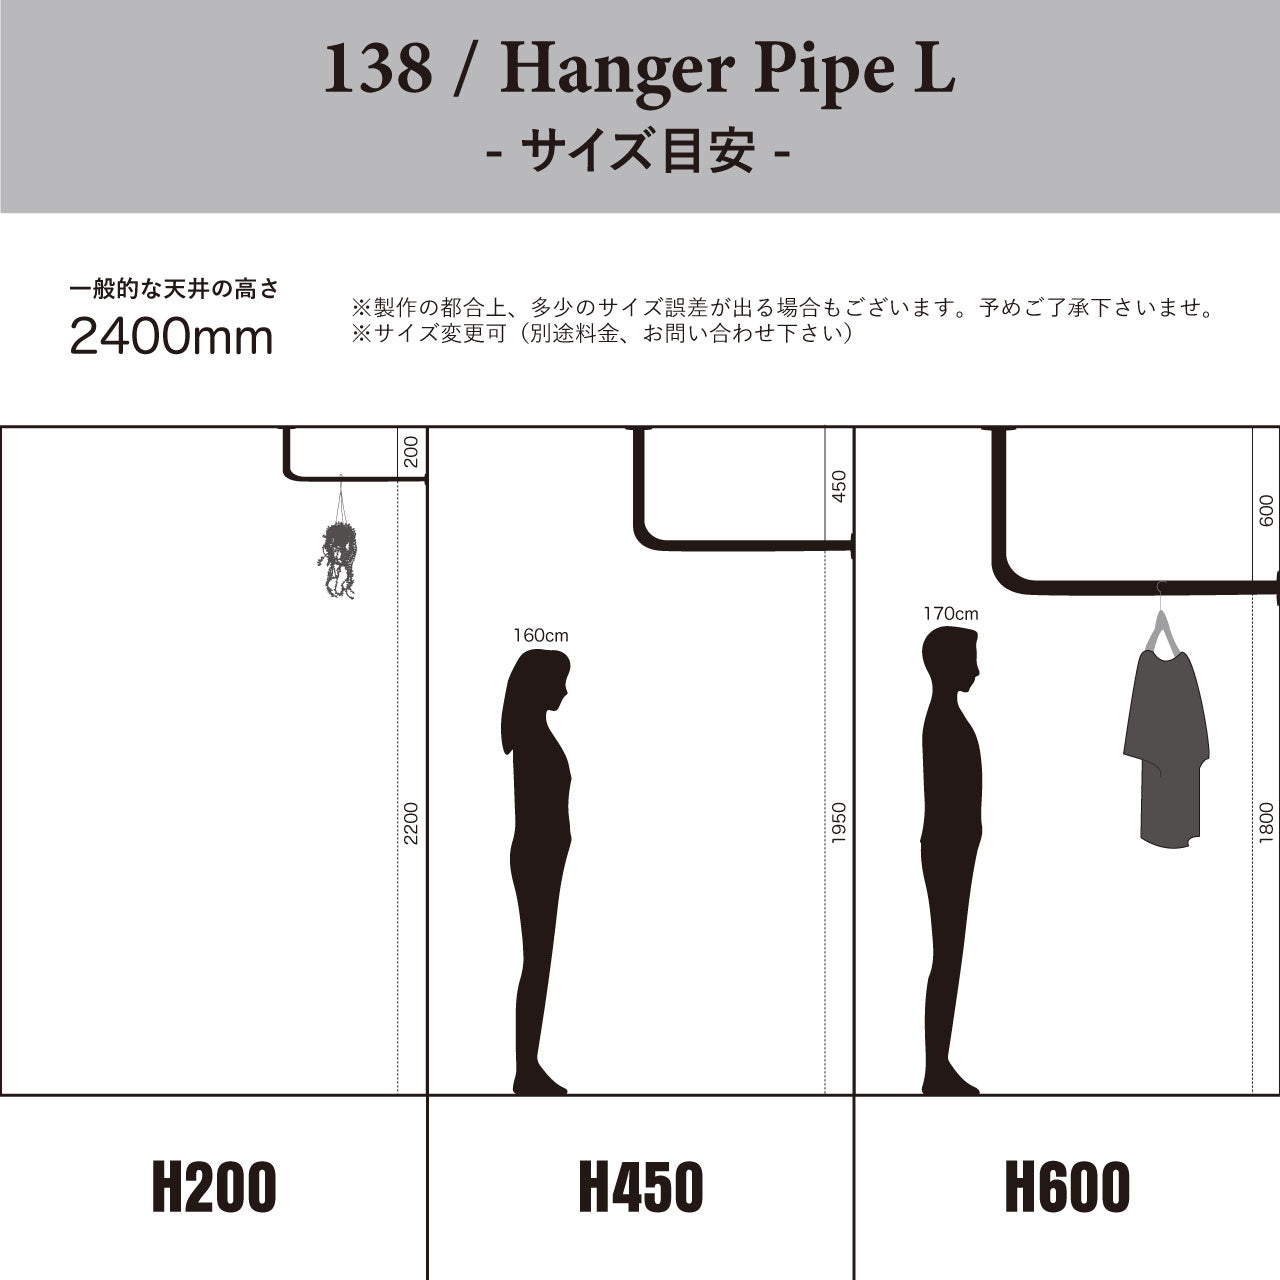 Hanger Pipe L